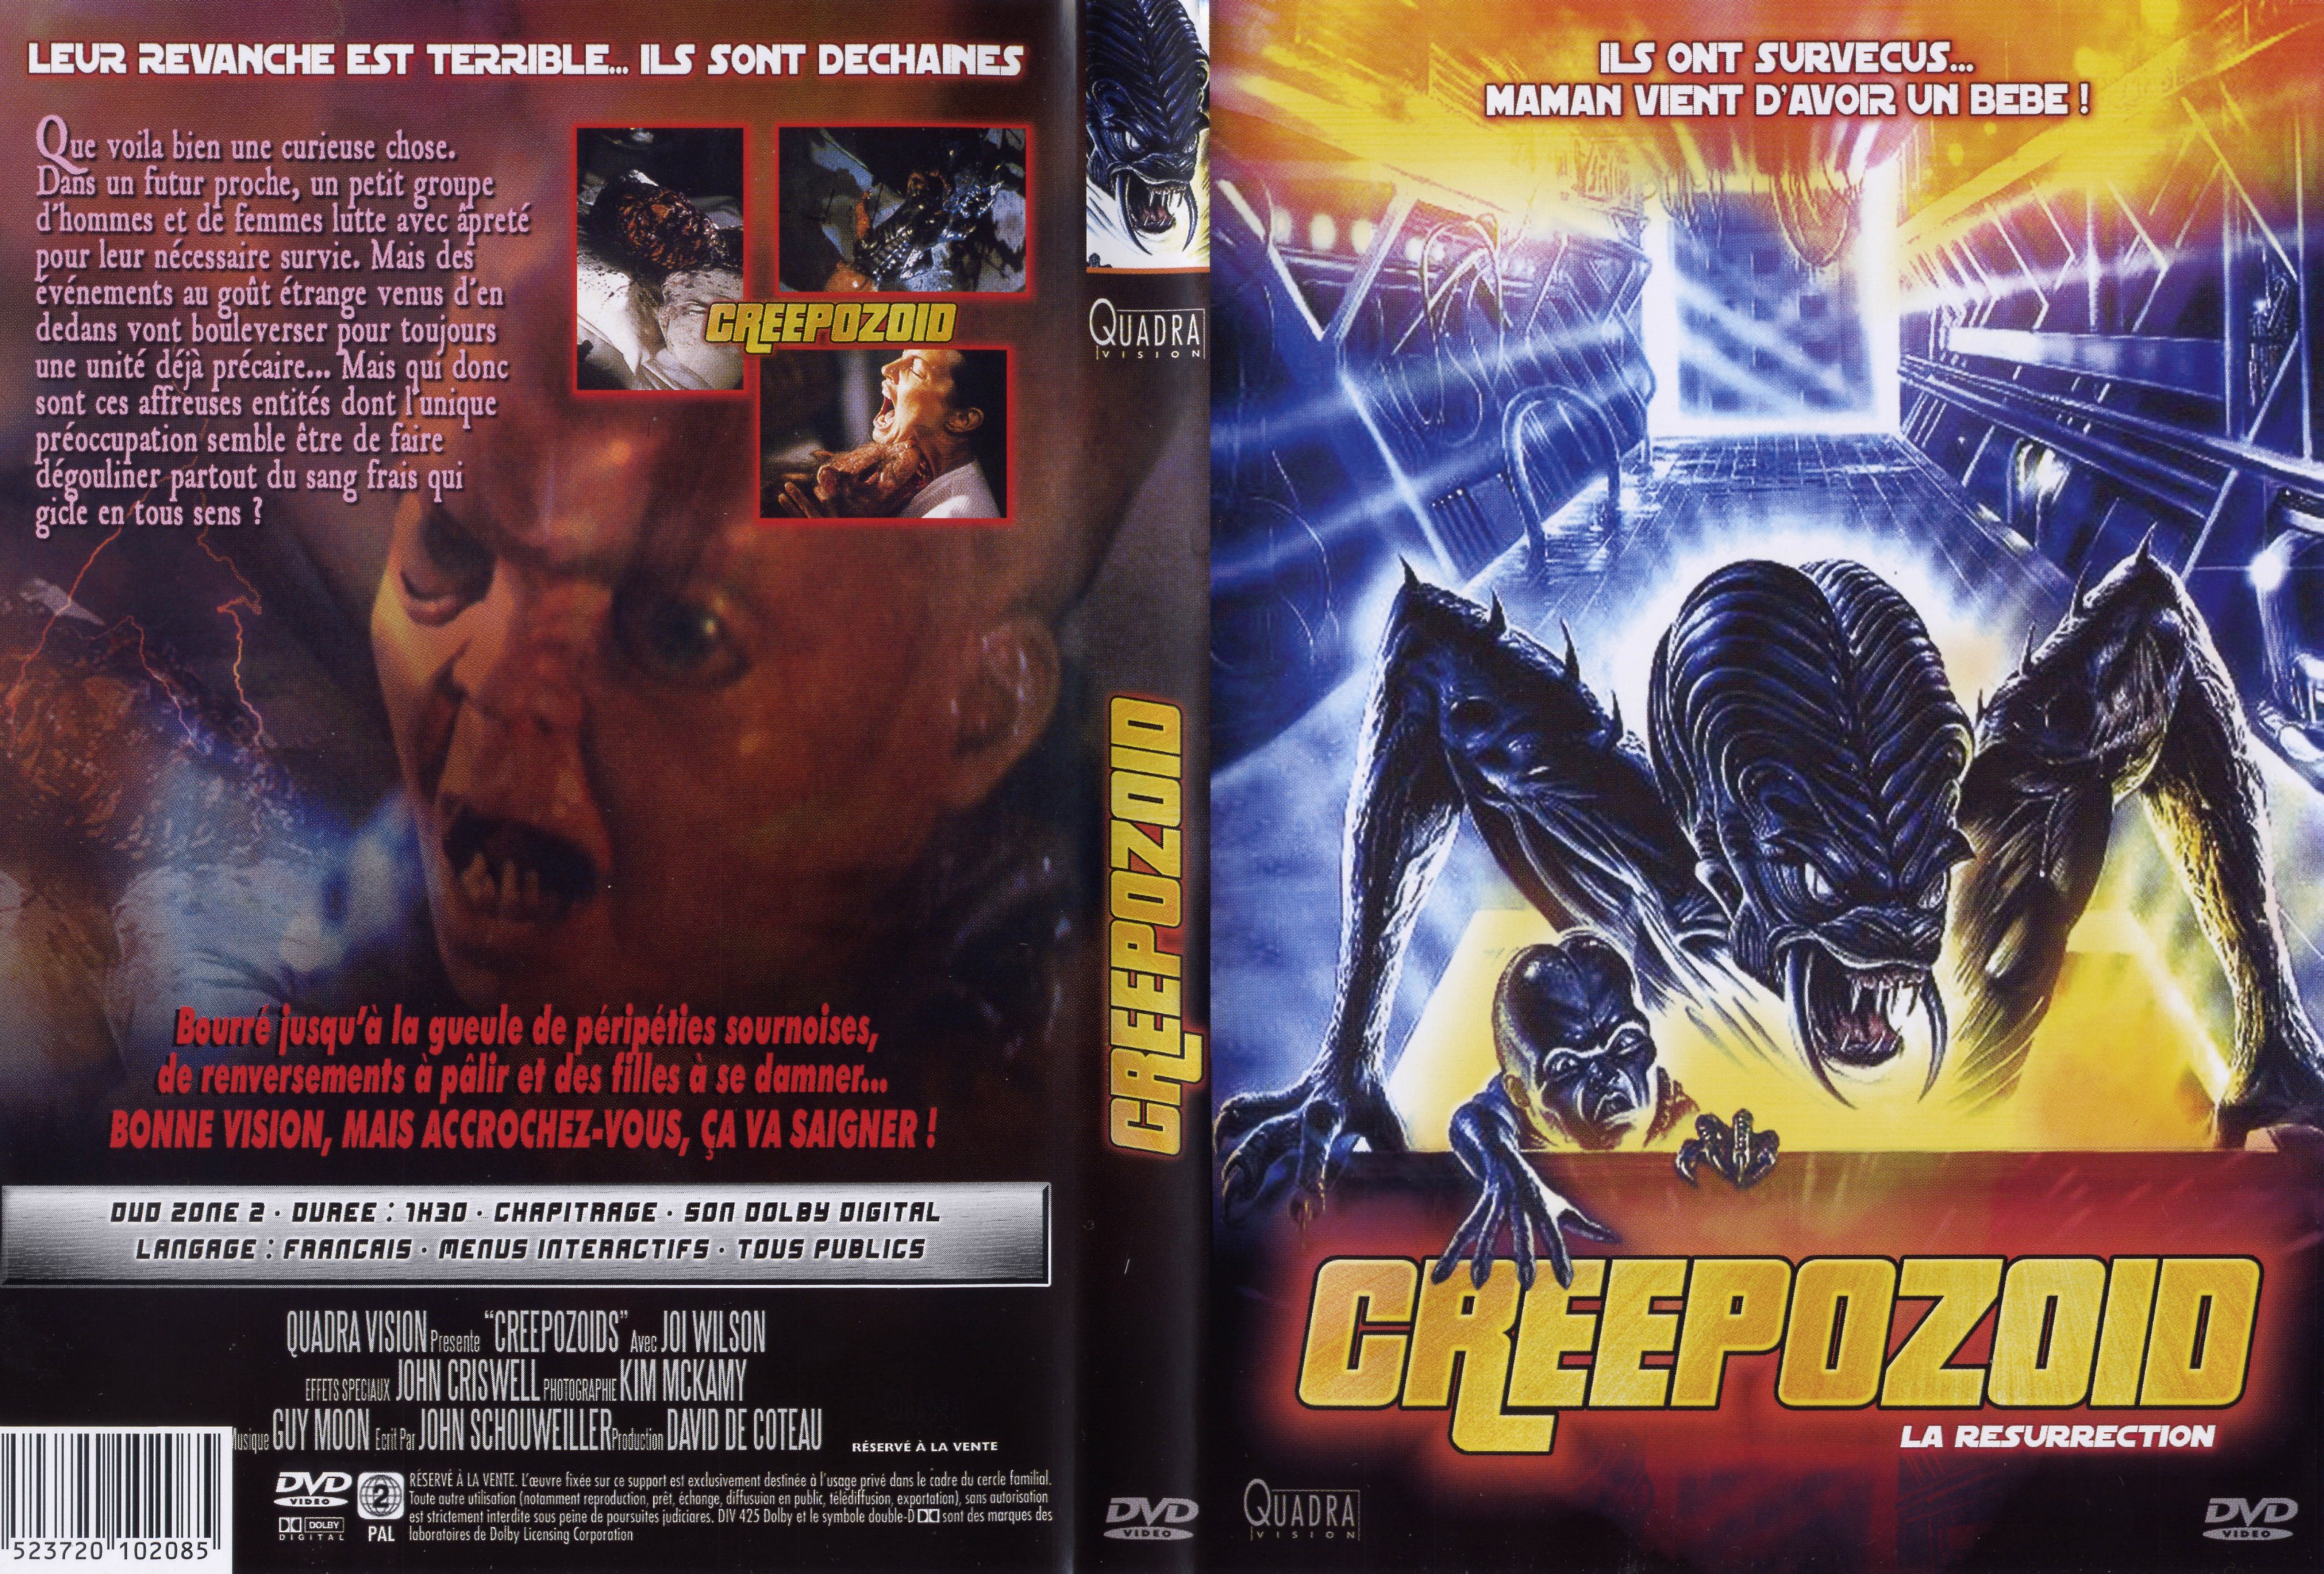 Jaquette DVD Creepozoid